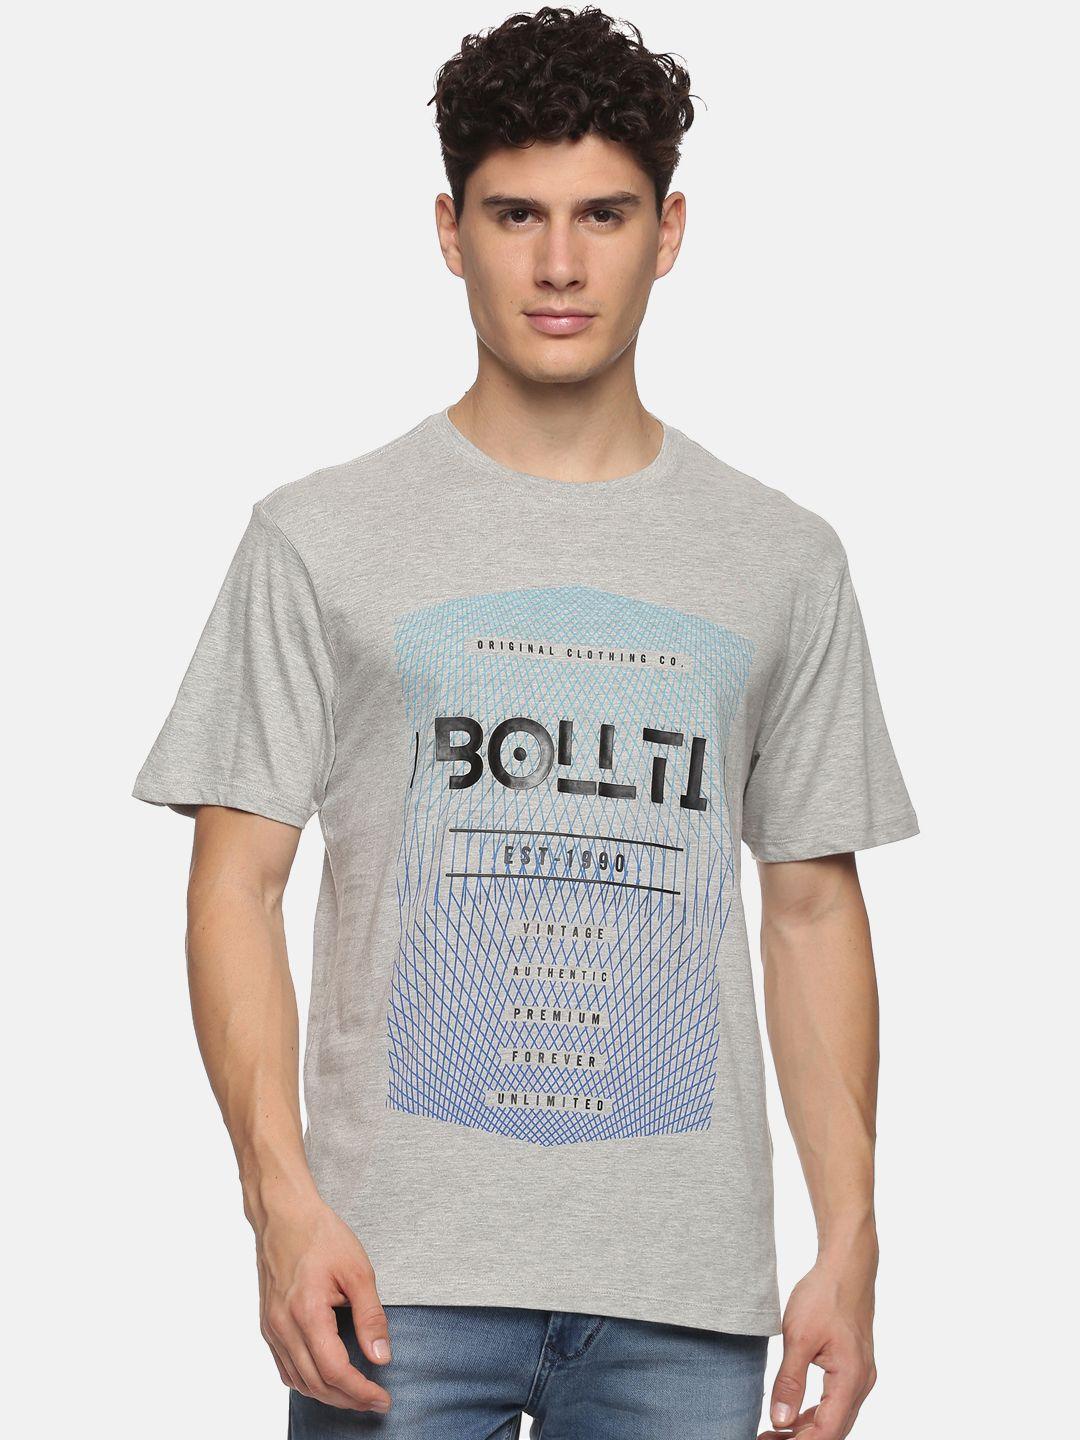 bollti typography printed cotton t-shirt